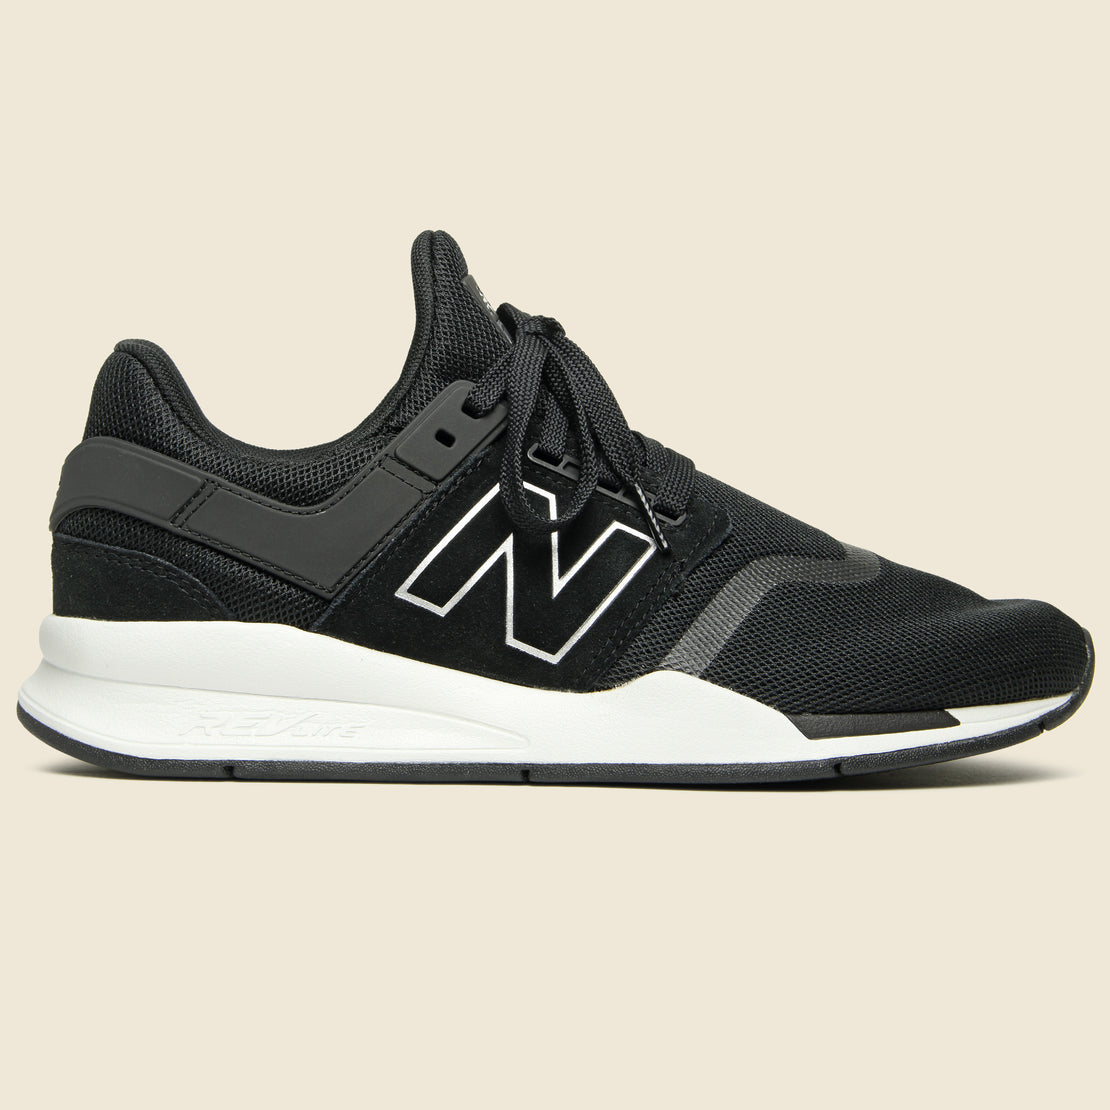 New Balance 247 Sneaker - Black/Munsell